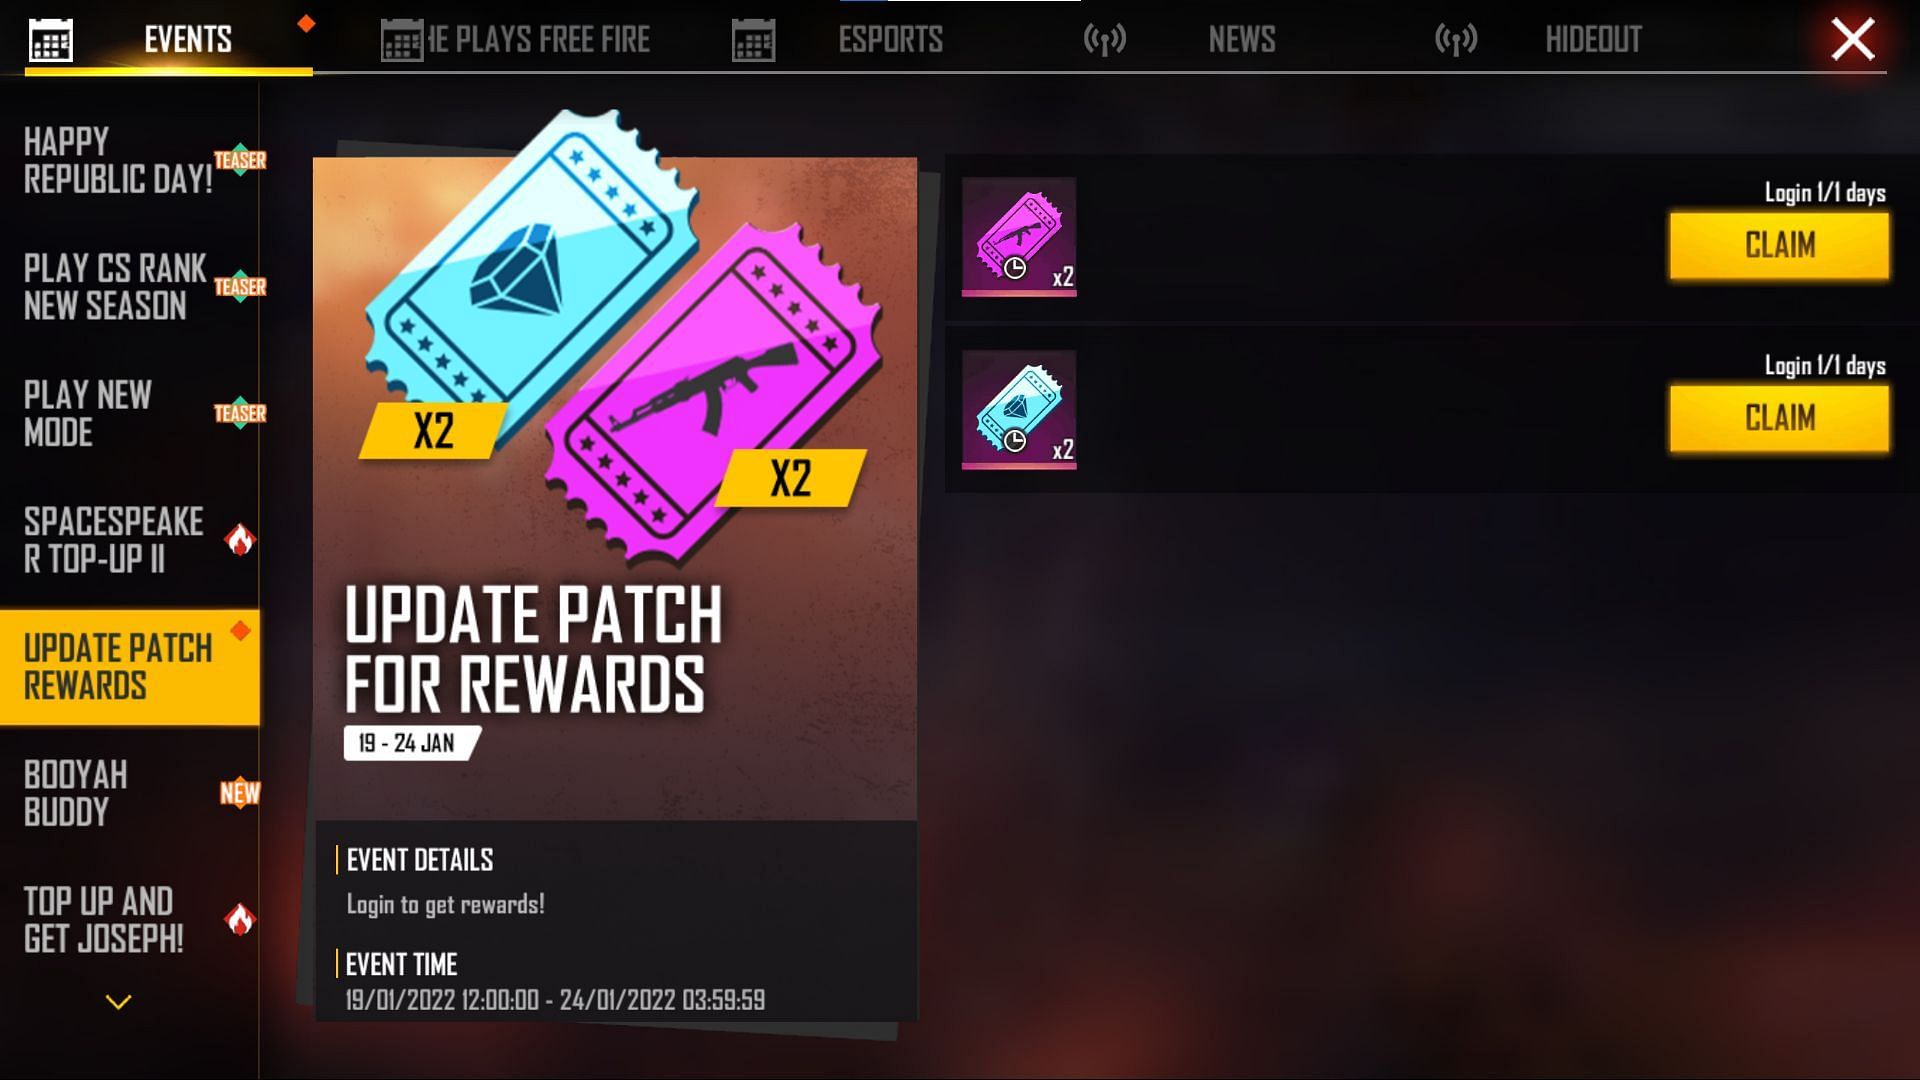 Update patch rewards features two vouchers (Image via Garena)